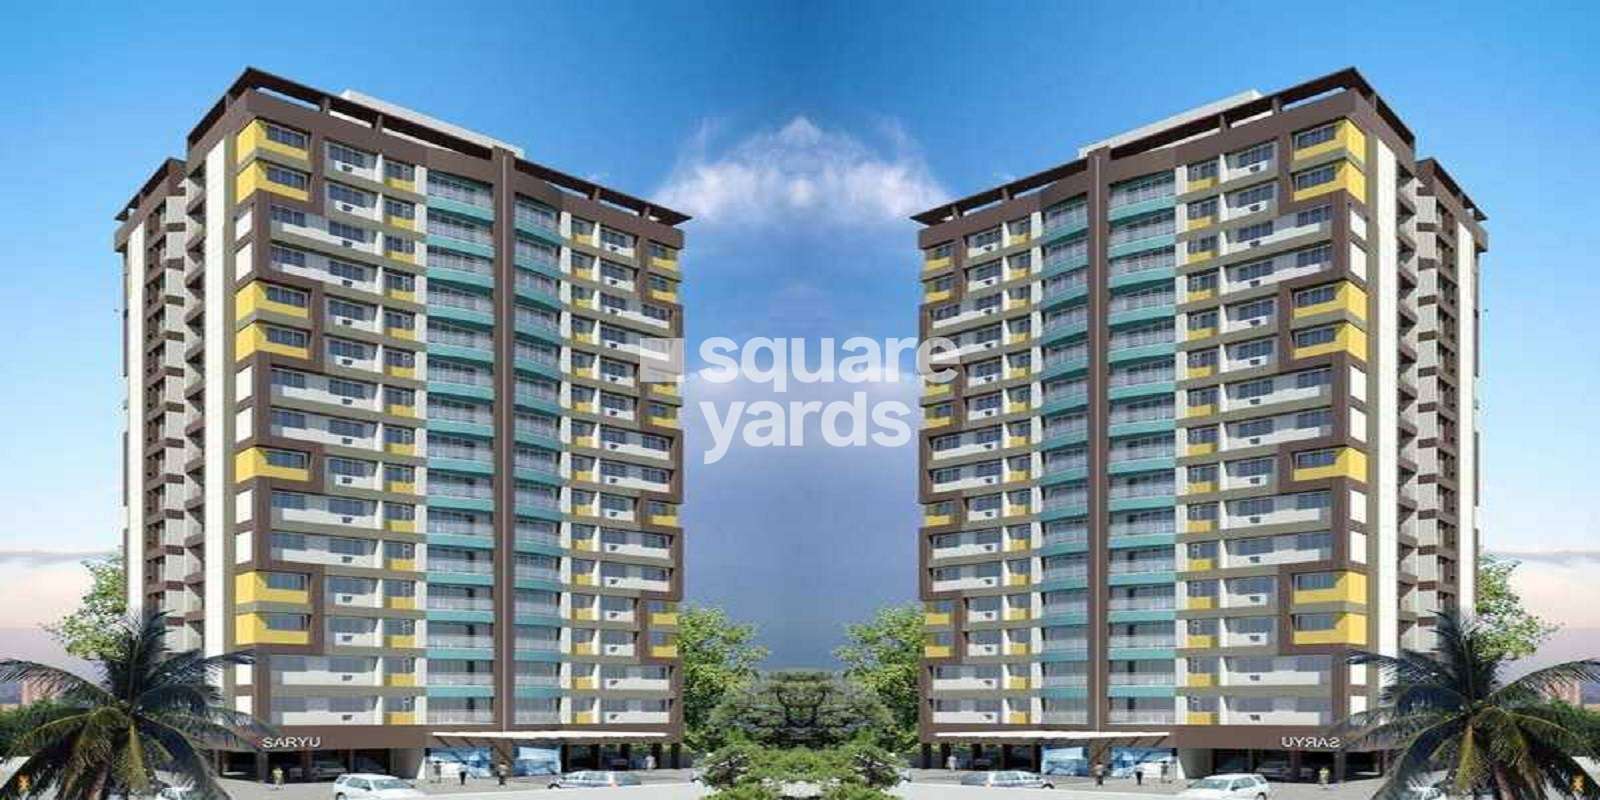 Jangid Saryu Apartment Cover Image